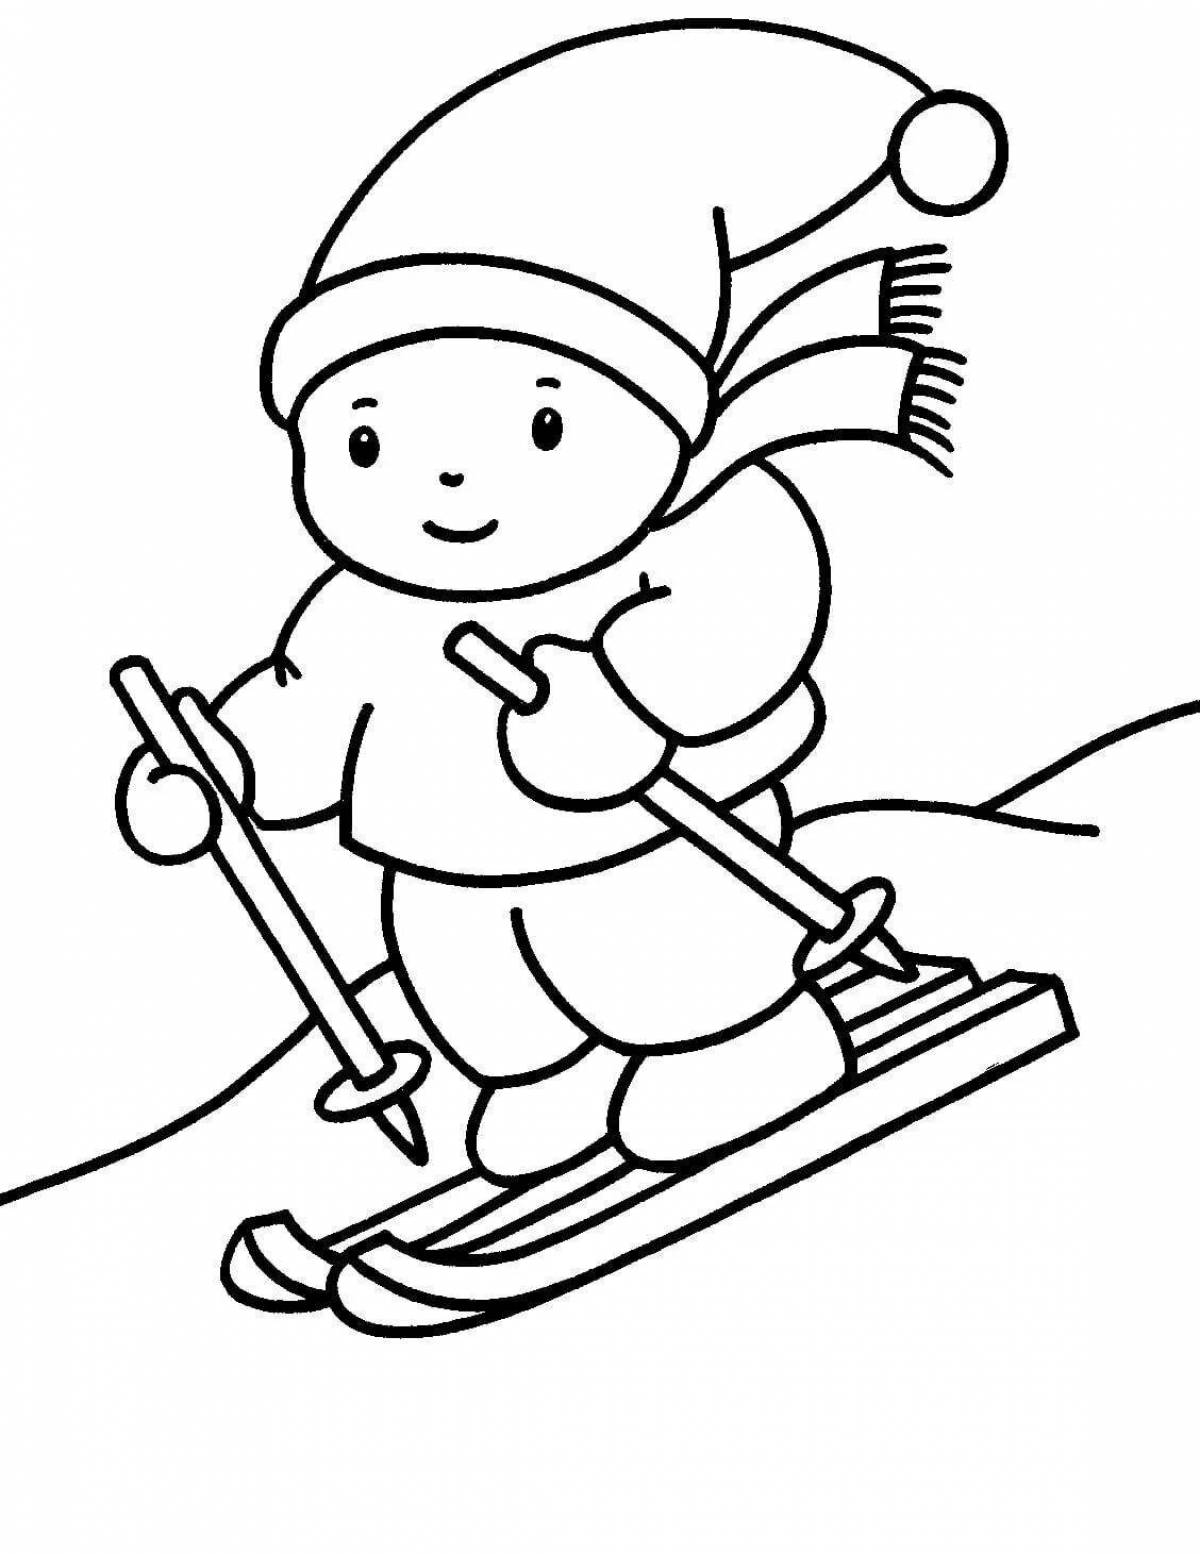 Adorable skiing coloring book